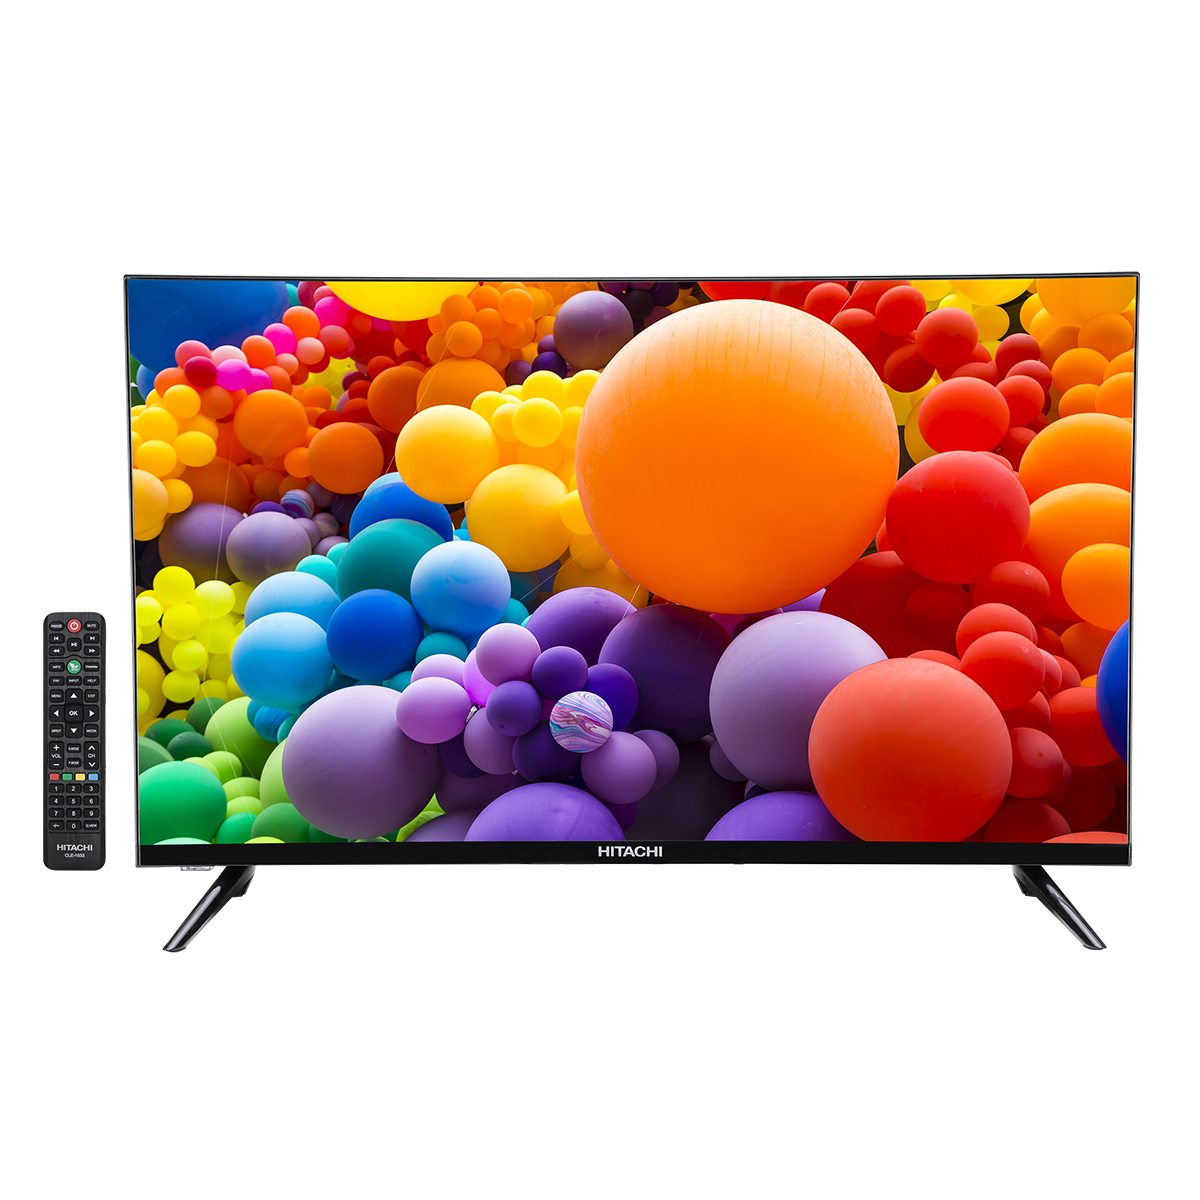 Hitachi 80 cm (32 inch) HD Ready LED TV (LD32VR01H, Black)_1